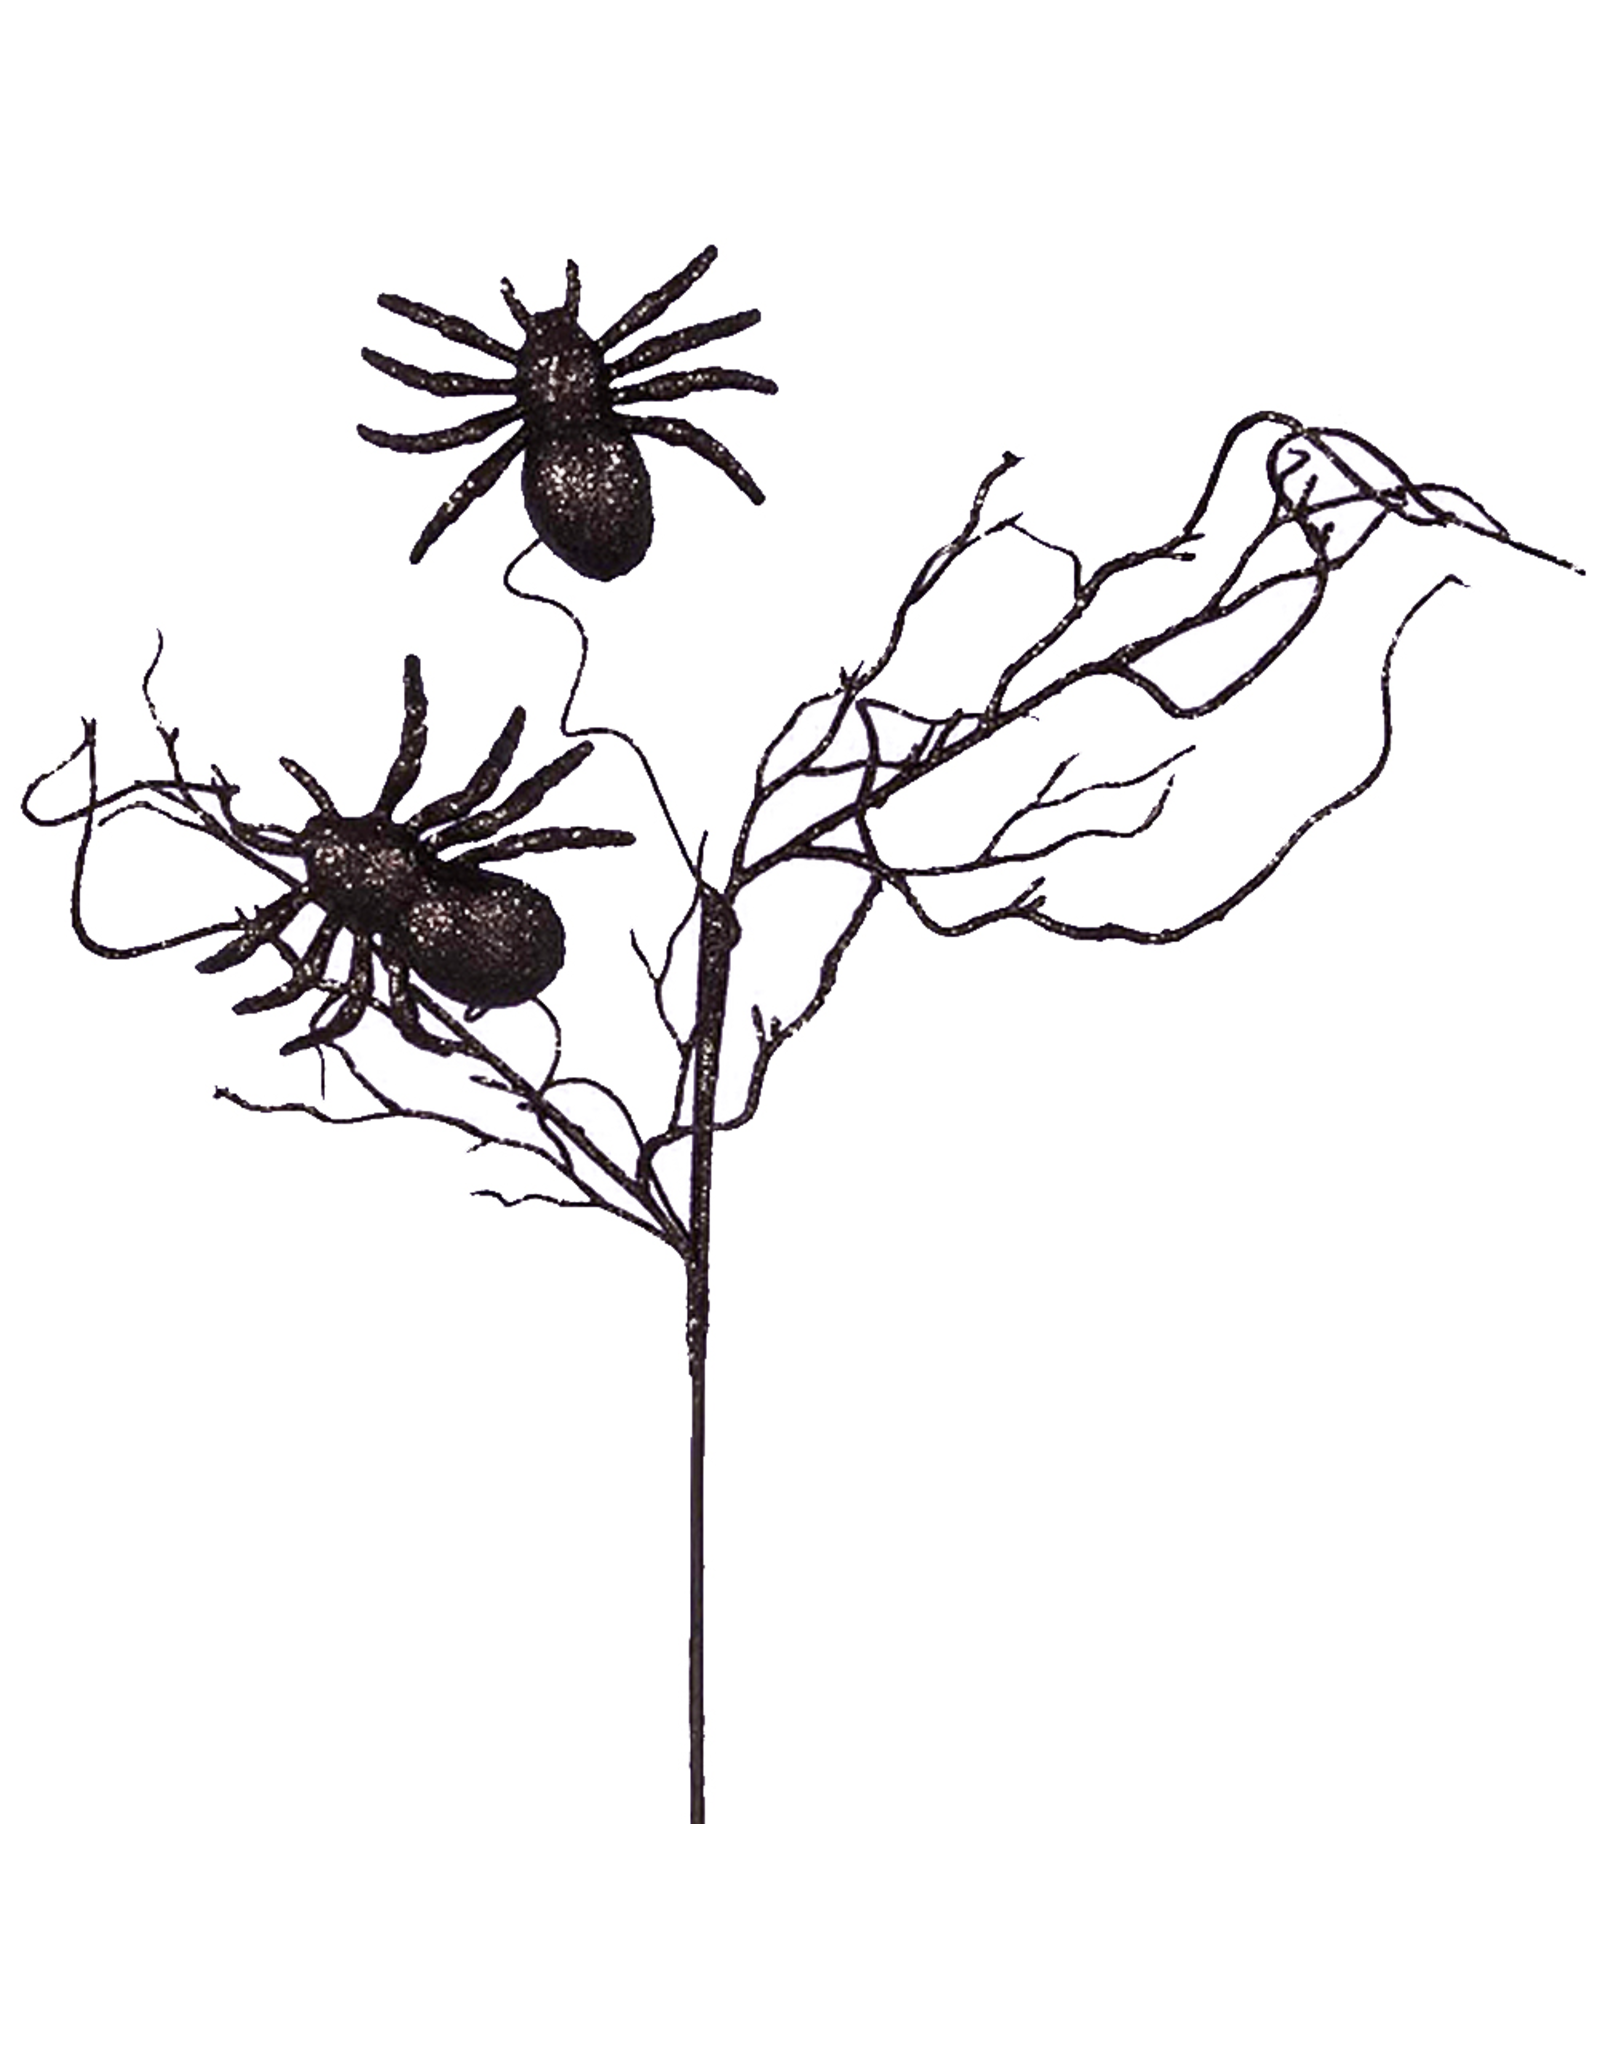 Kurt Adler Halloween Decor Black Branch Spray w Spiders -B